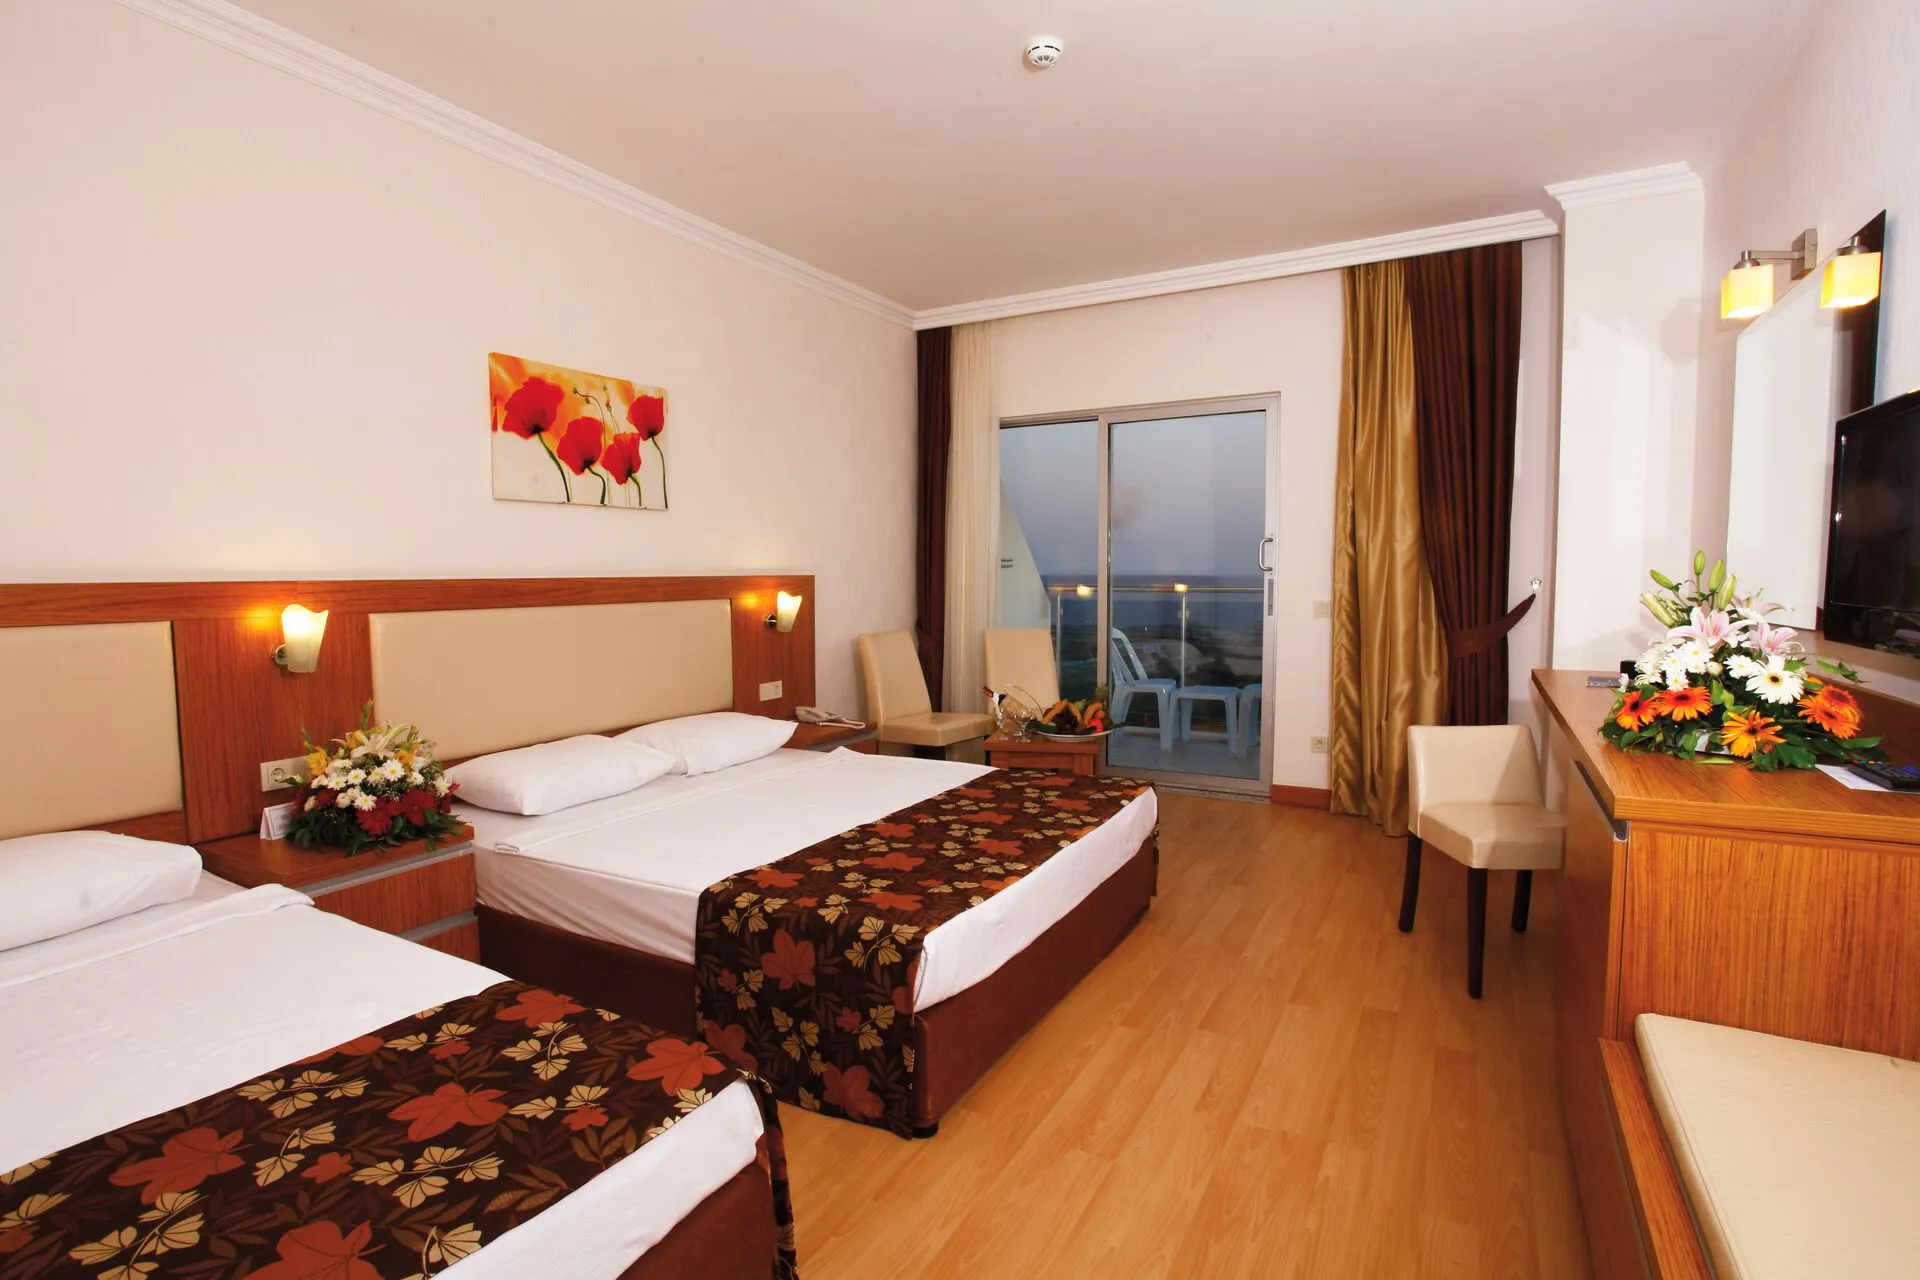 Turquie - Manavgat - Hôtel Cenger Beach Resort & Spa 5*